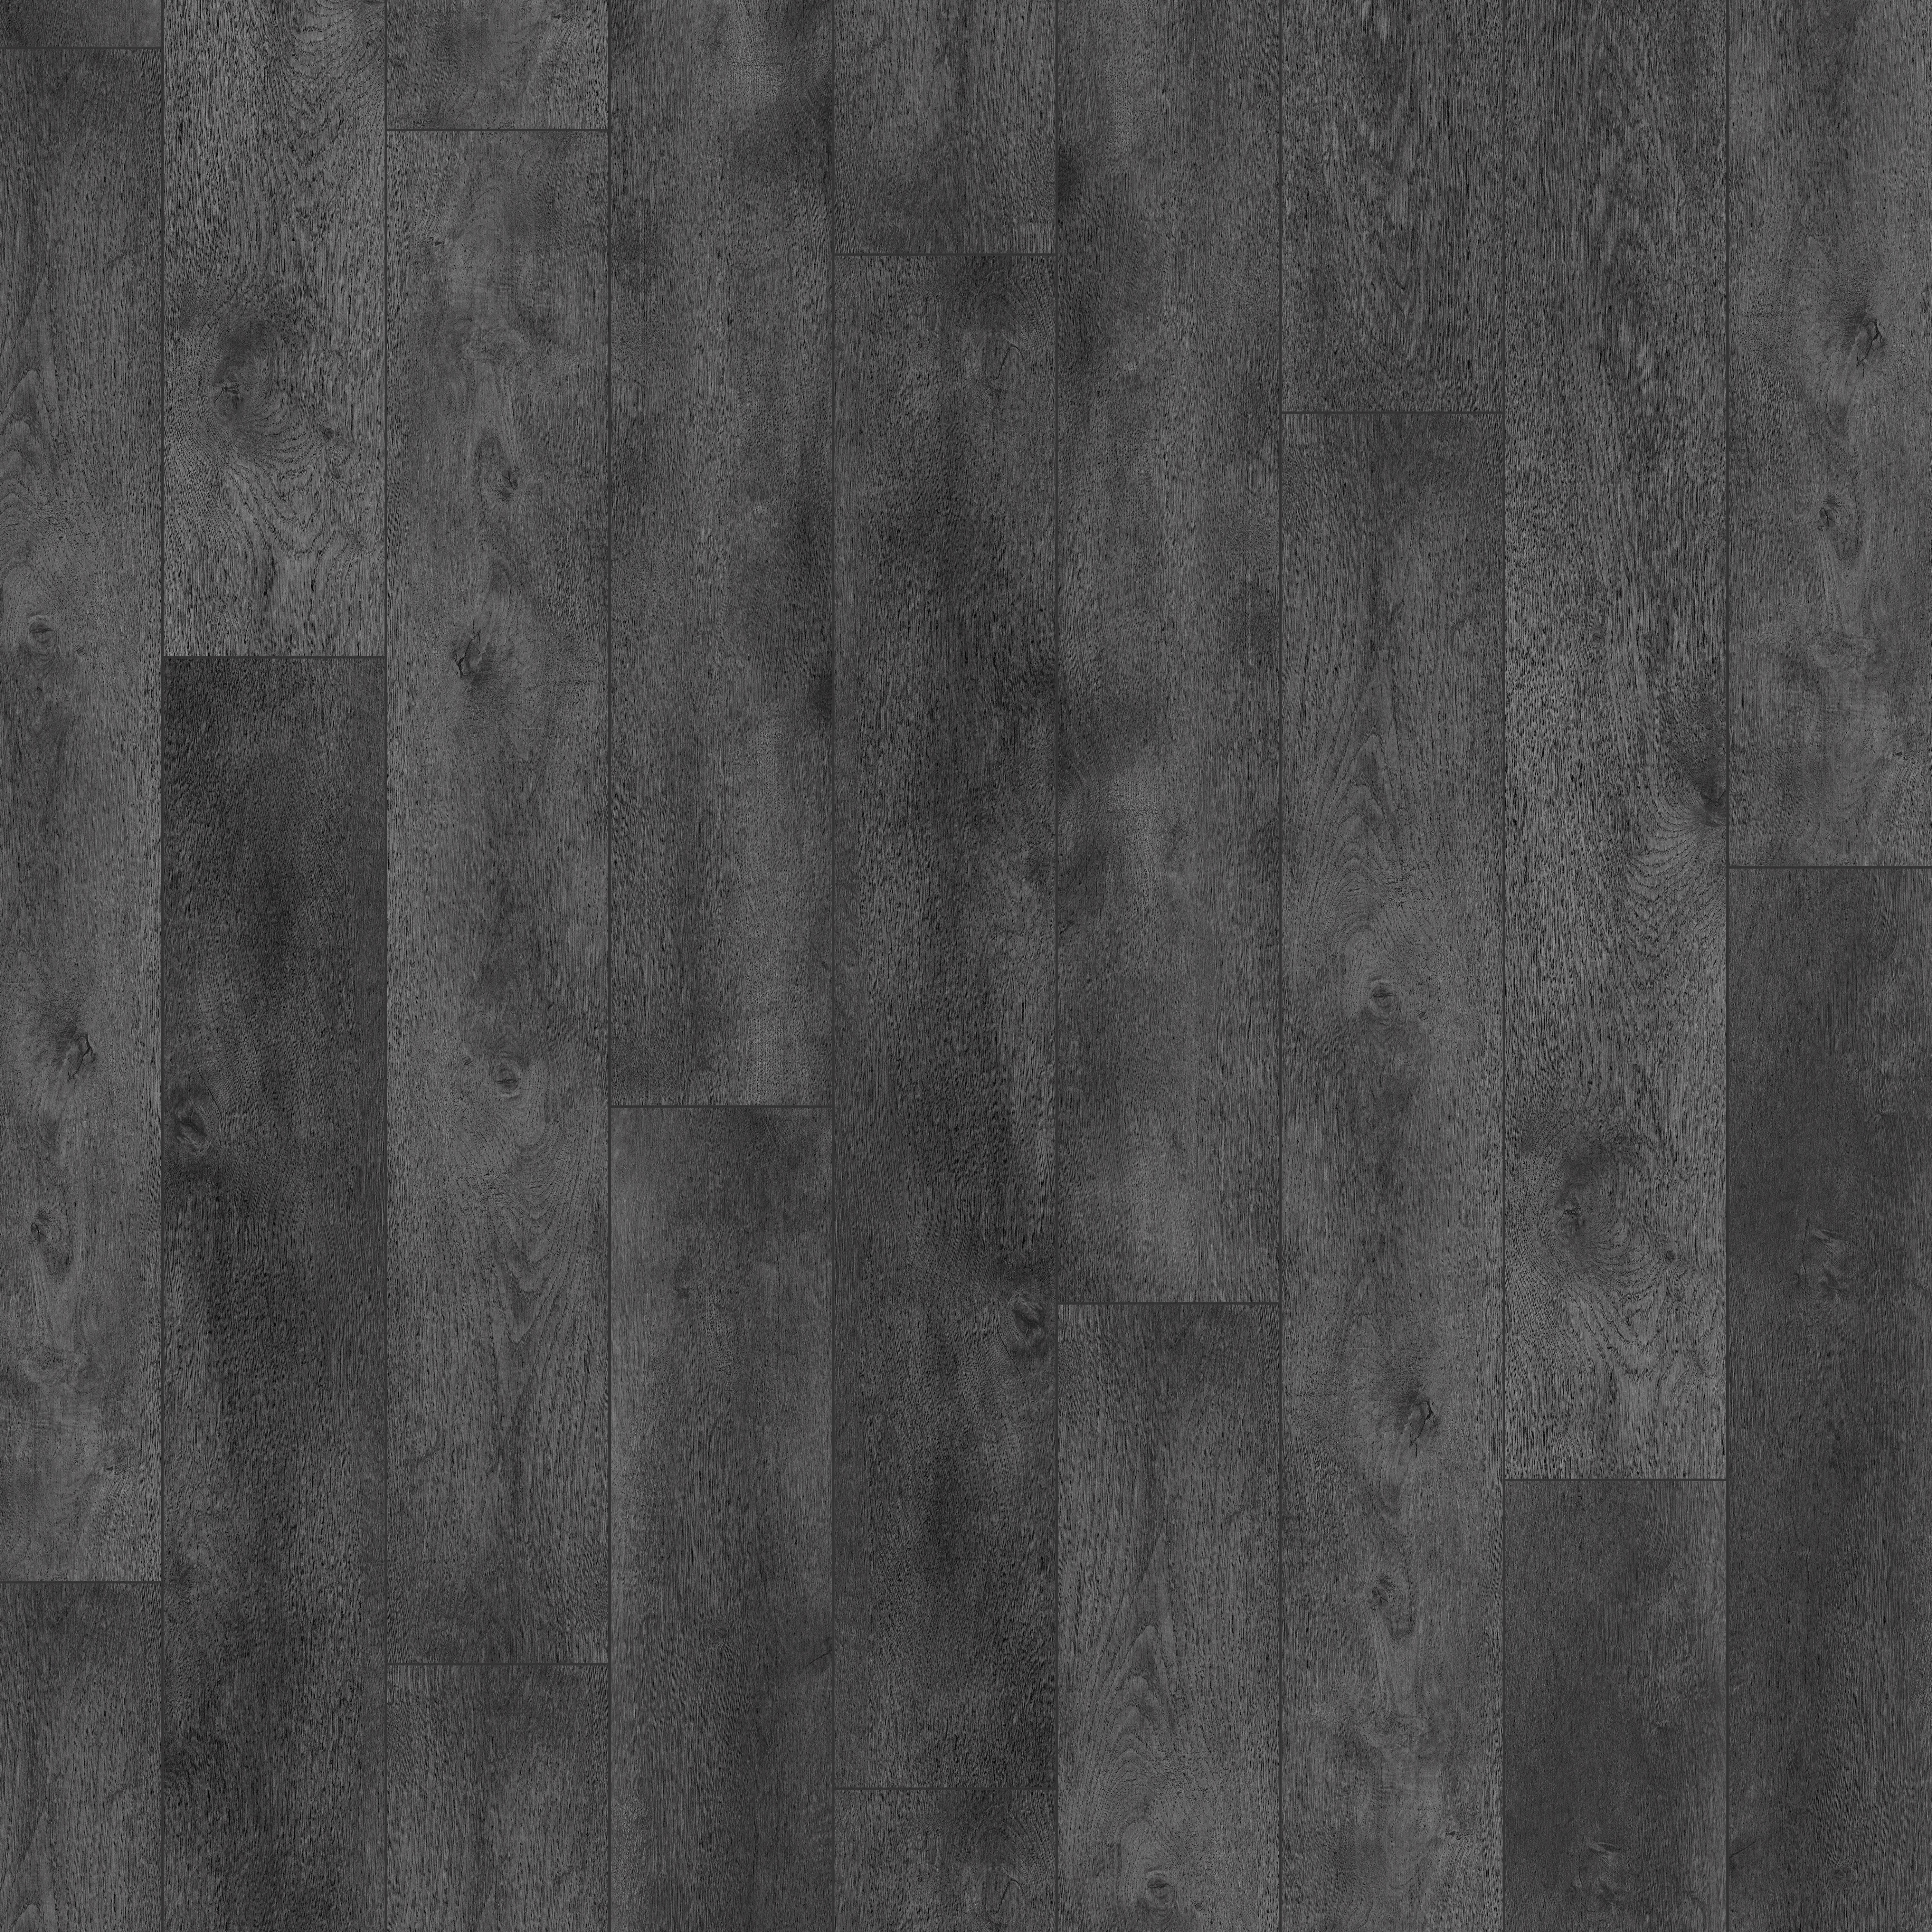 Novocore Embossed Dark Grey Luxury Vinyl Flooring - 1.98m2 (Pack of 9)